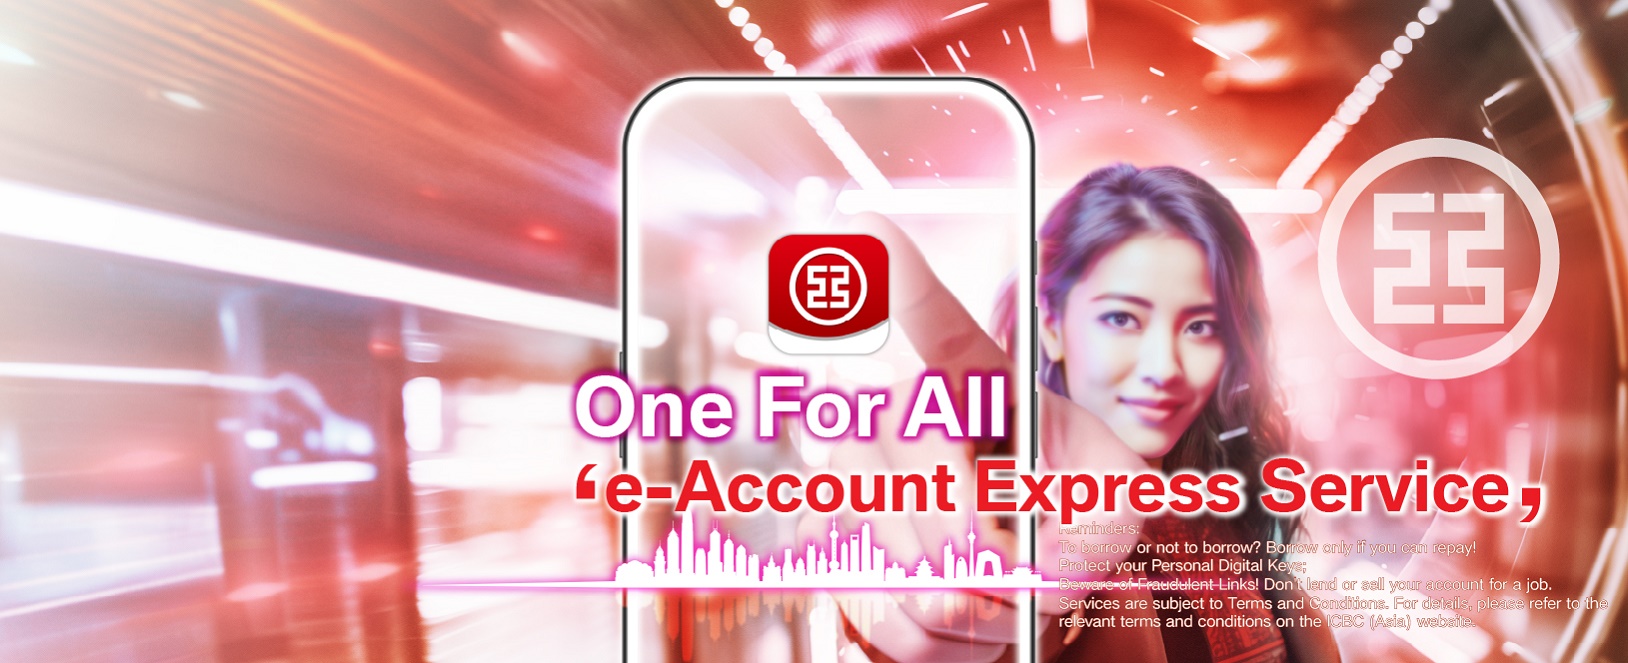 Mobile Banking “e-Account Express” Service